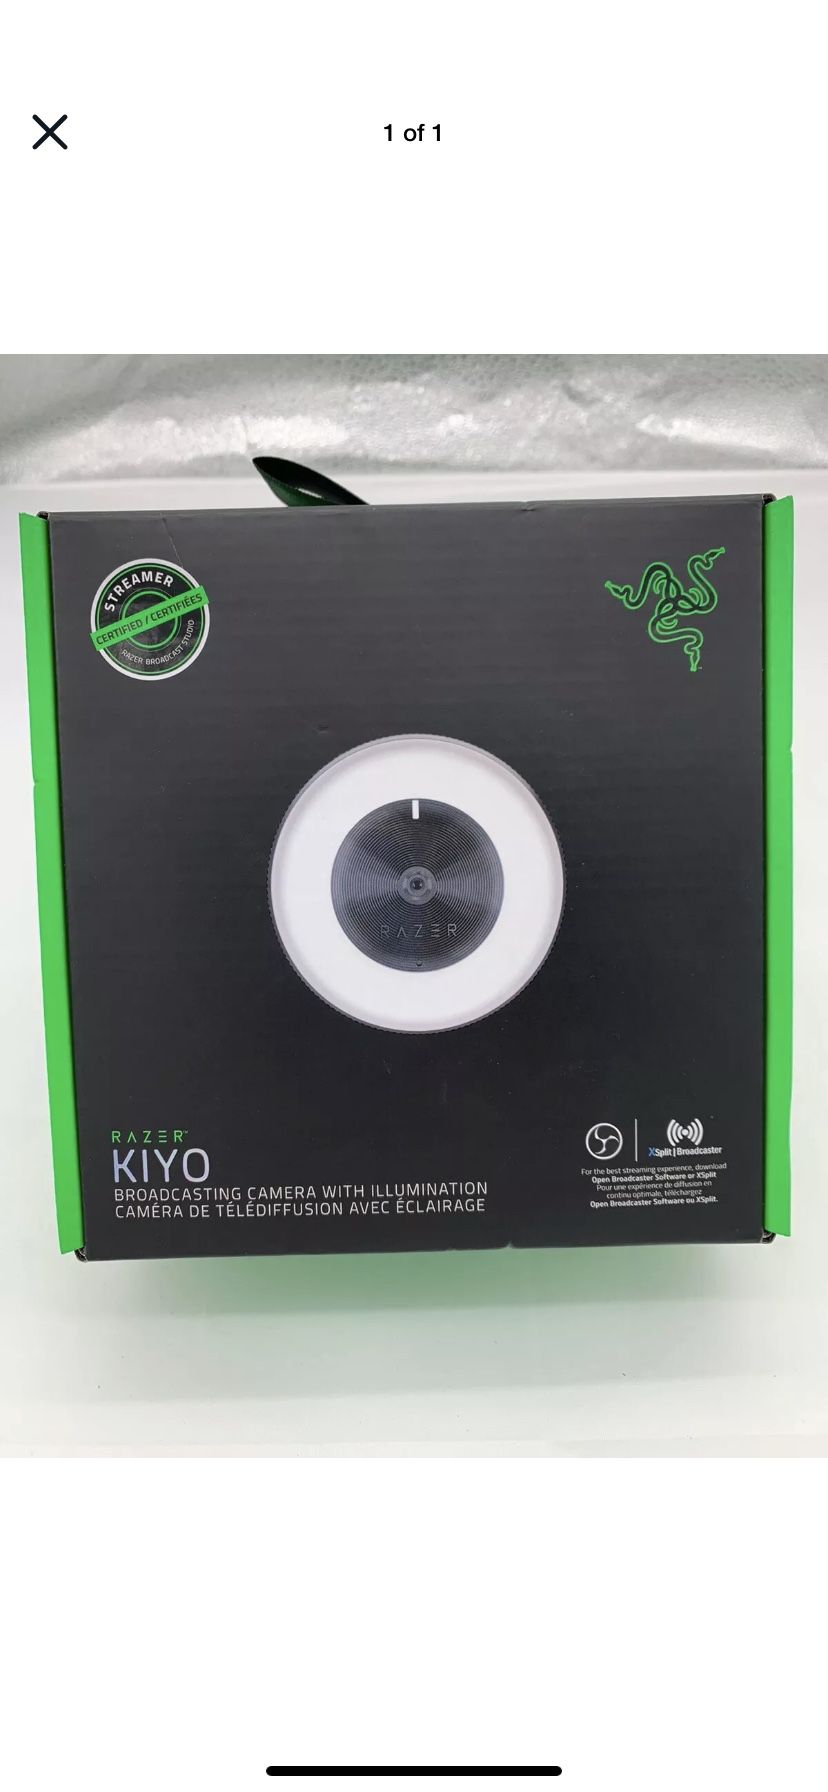 Razer Kiyo Full HD 1080p streaming camera